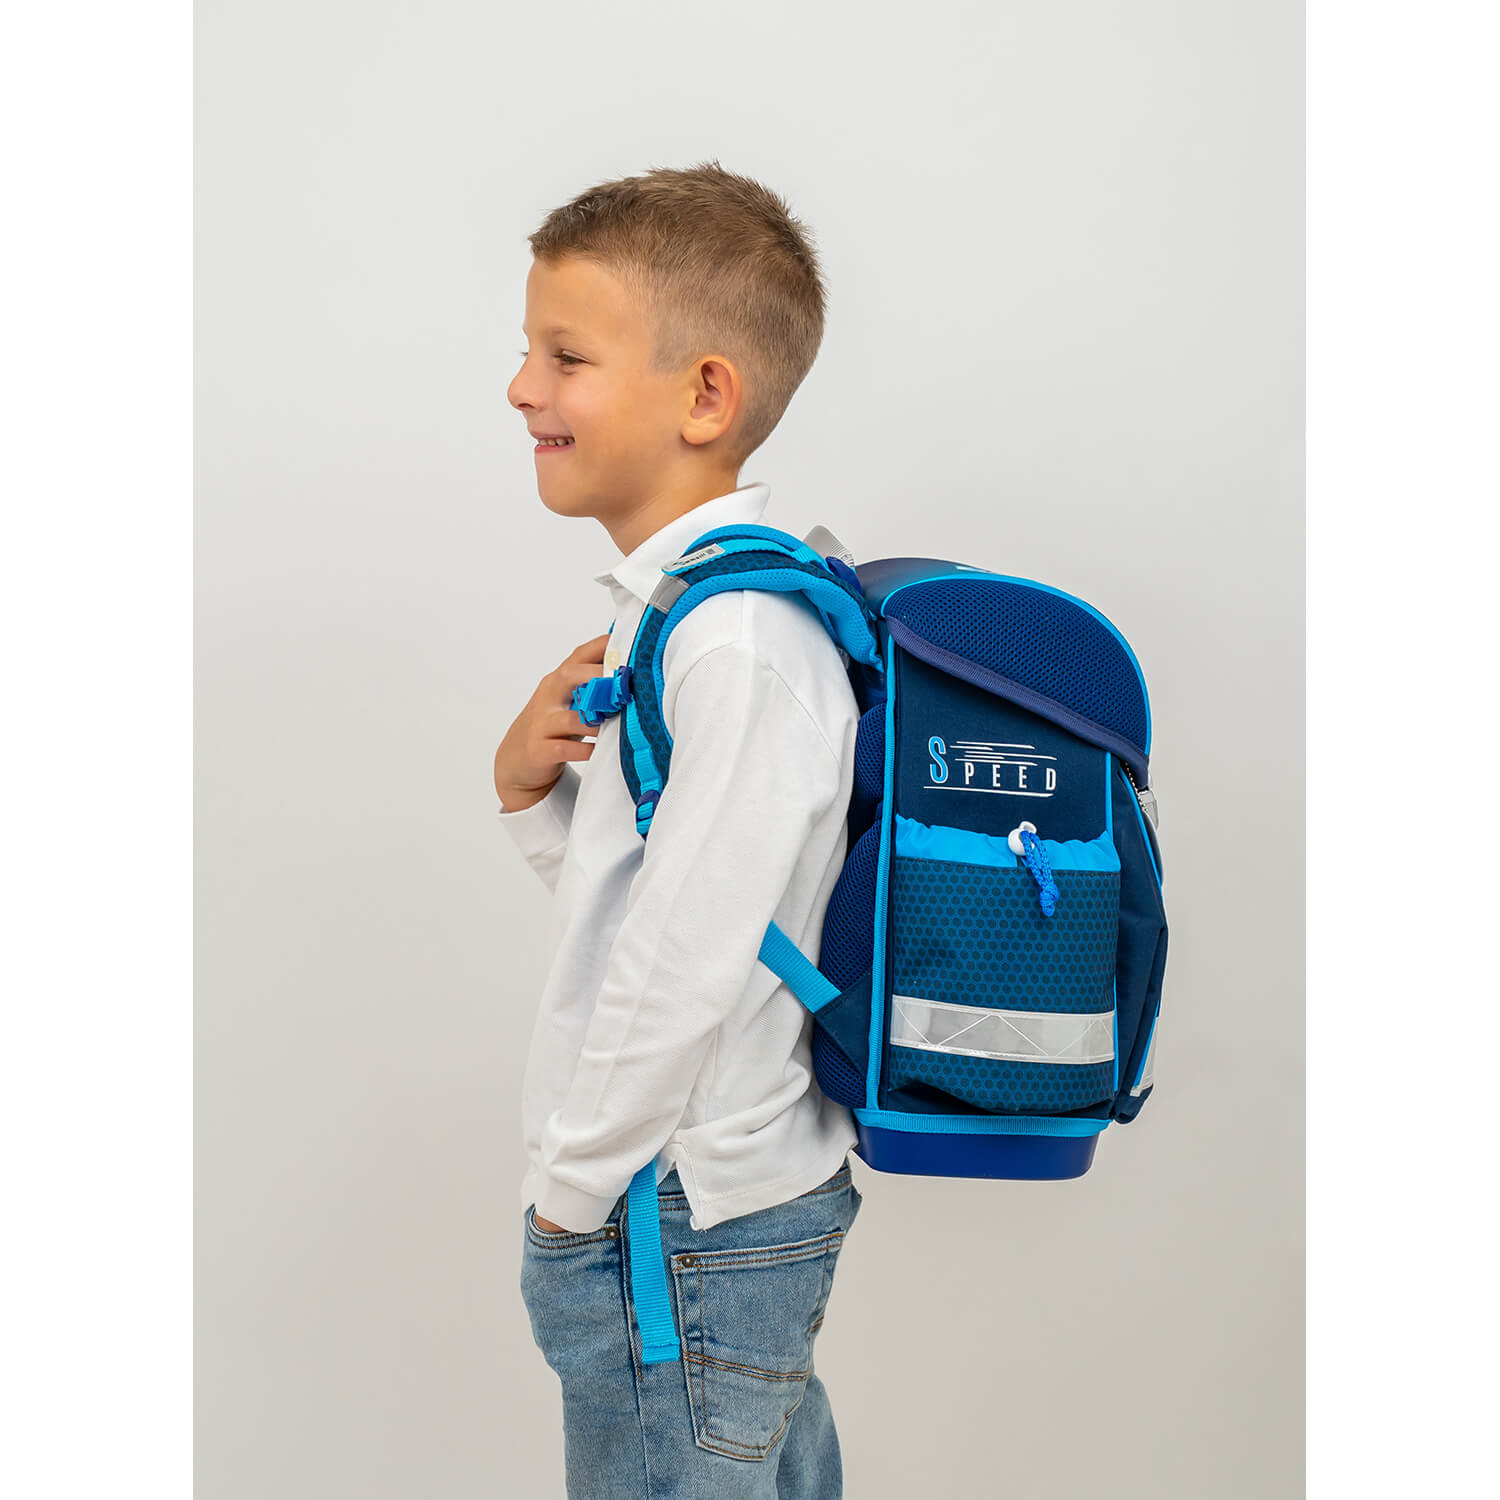 Classy Racing Blue Neon schoolbag set 5 pcs with GRATIS keychain